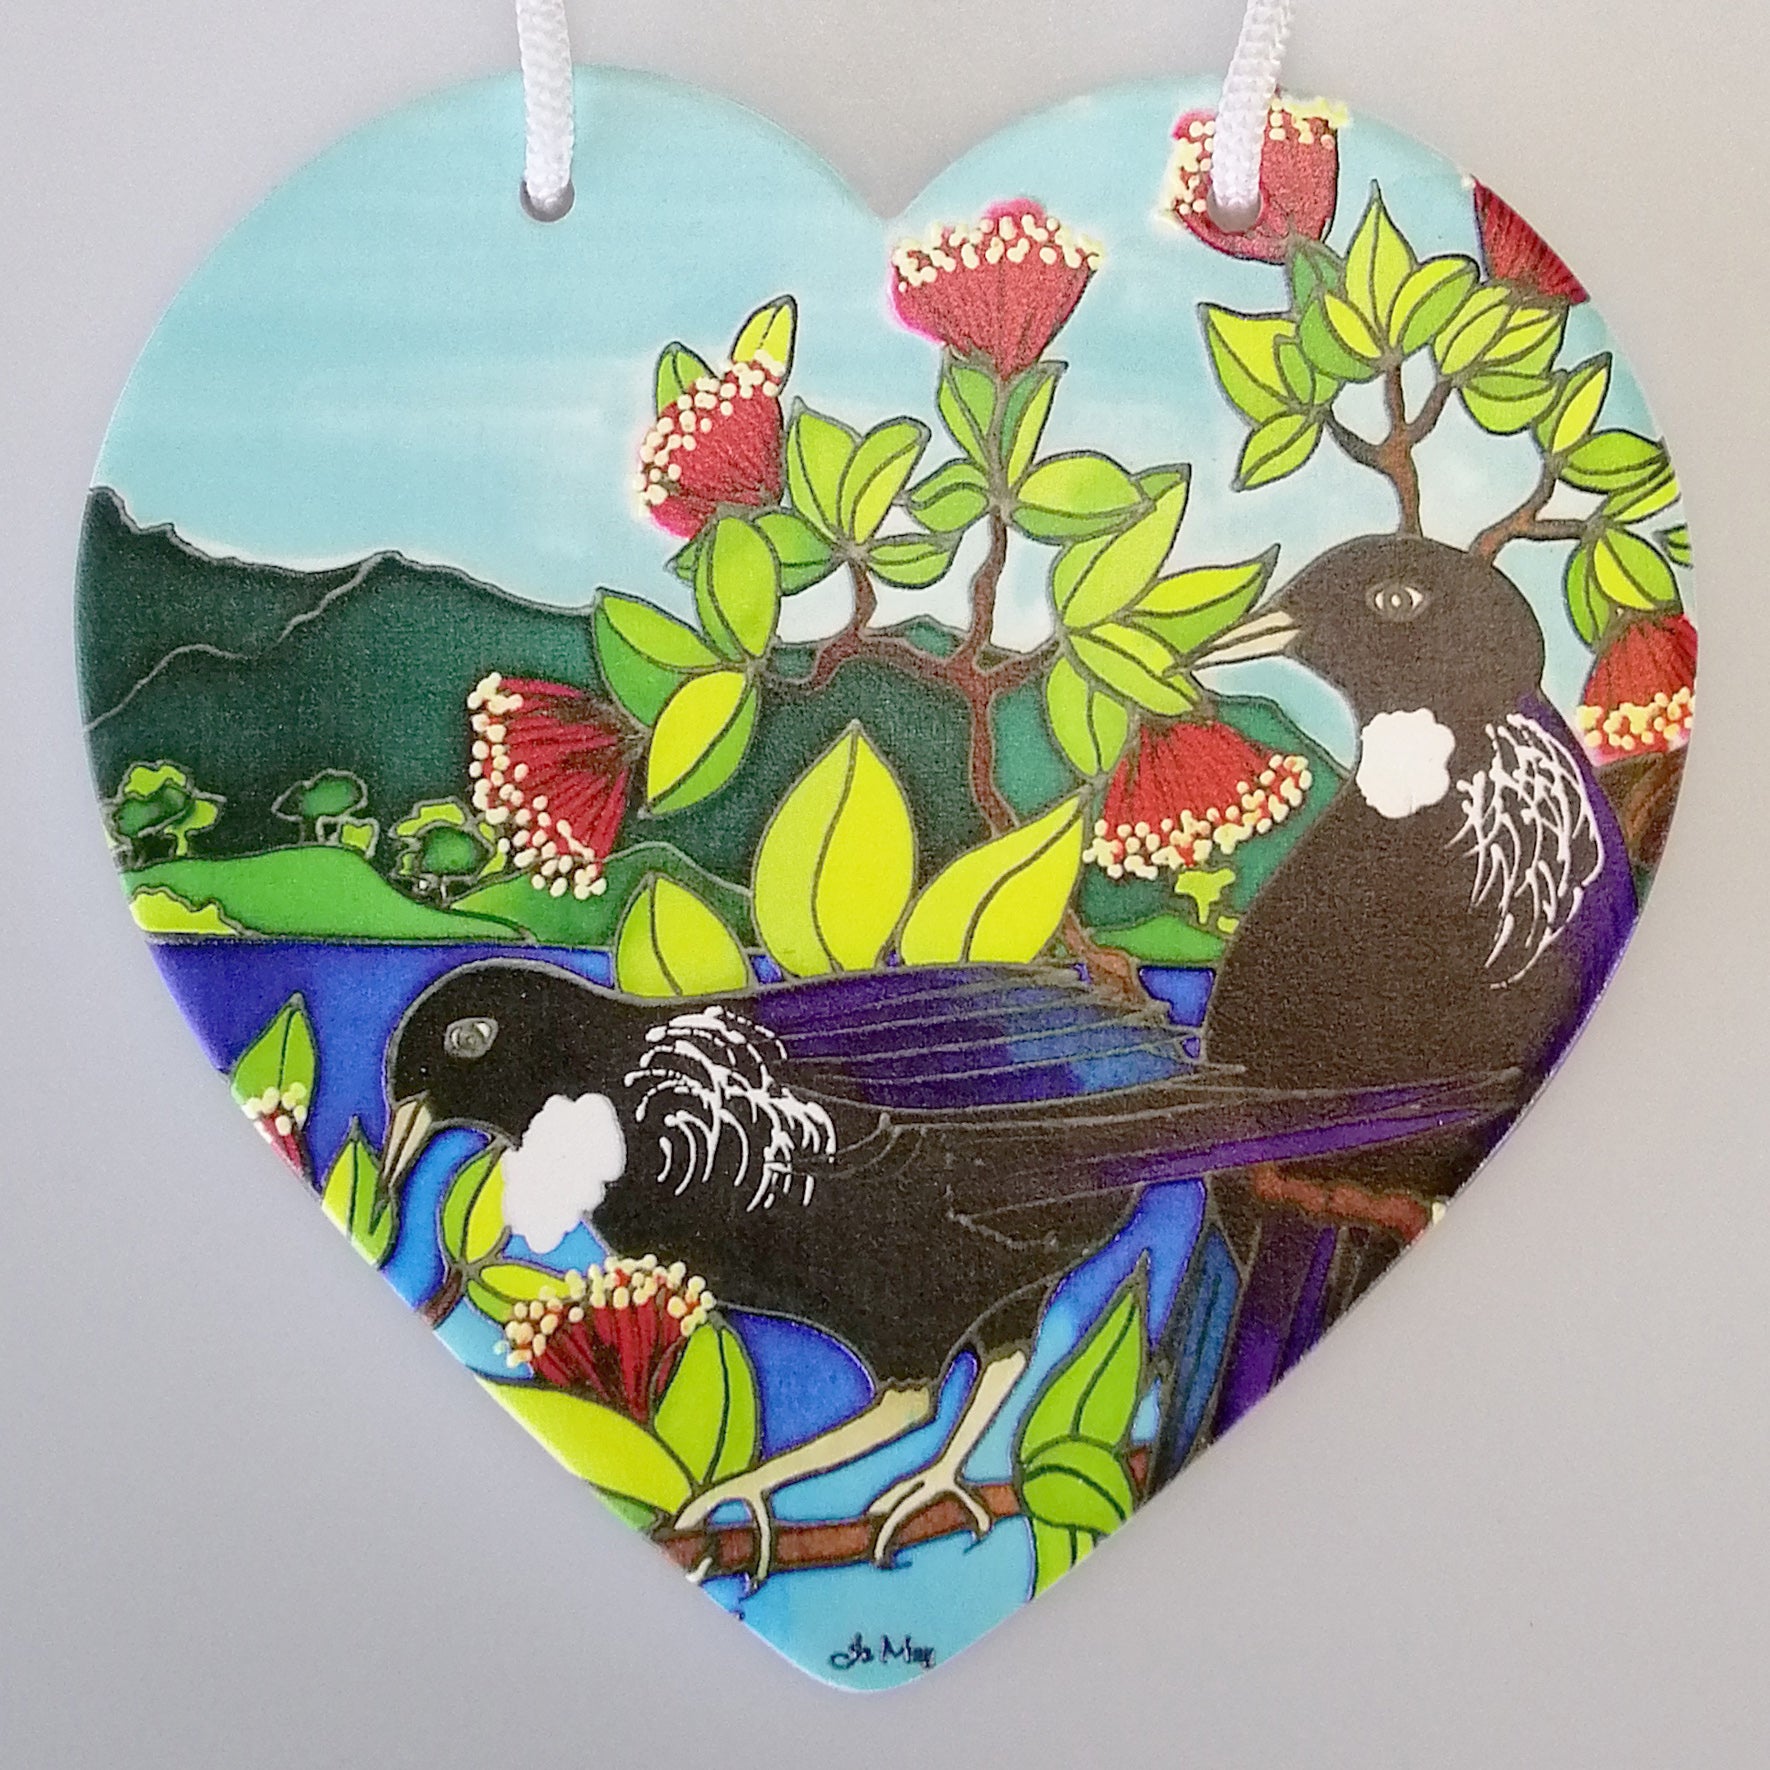 Jo May - Tuis Ceramic Heart Wall Hanging